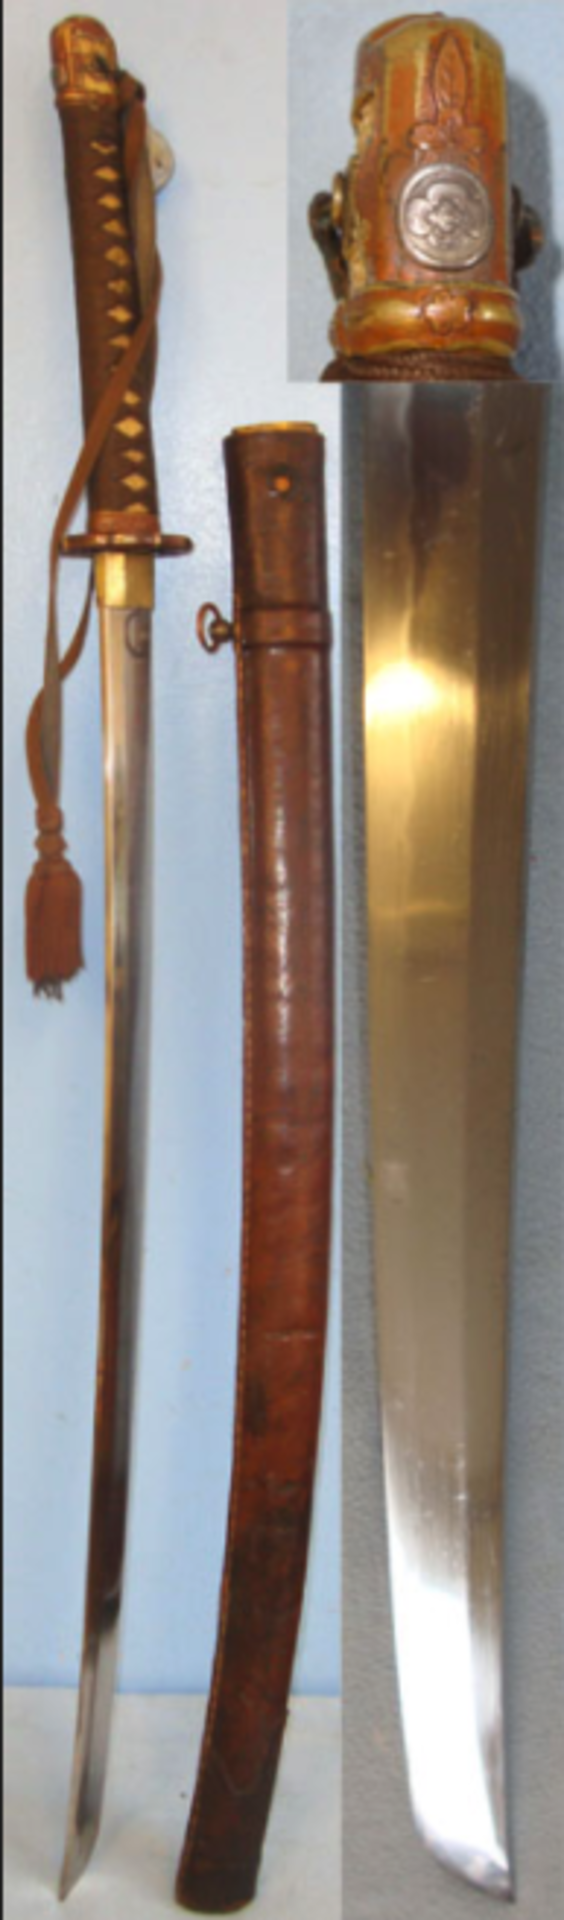 WW2 Japanese Officer's Sword With Signed Tang 'SAKA MUKI KANE SHIGE' - Image 3 of 3